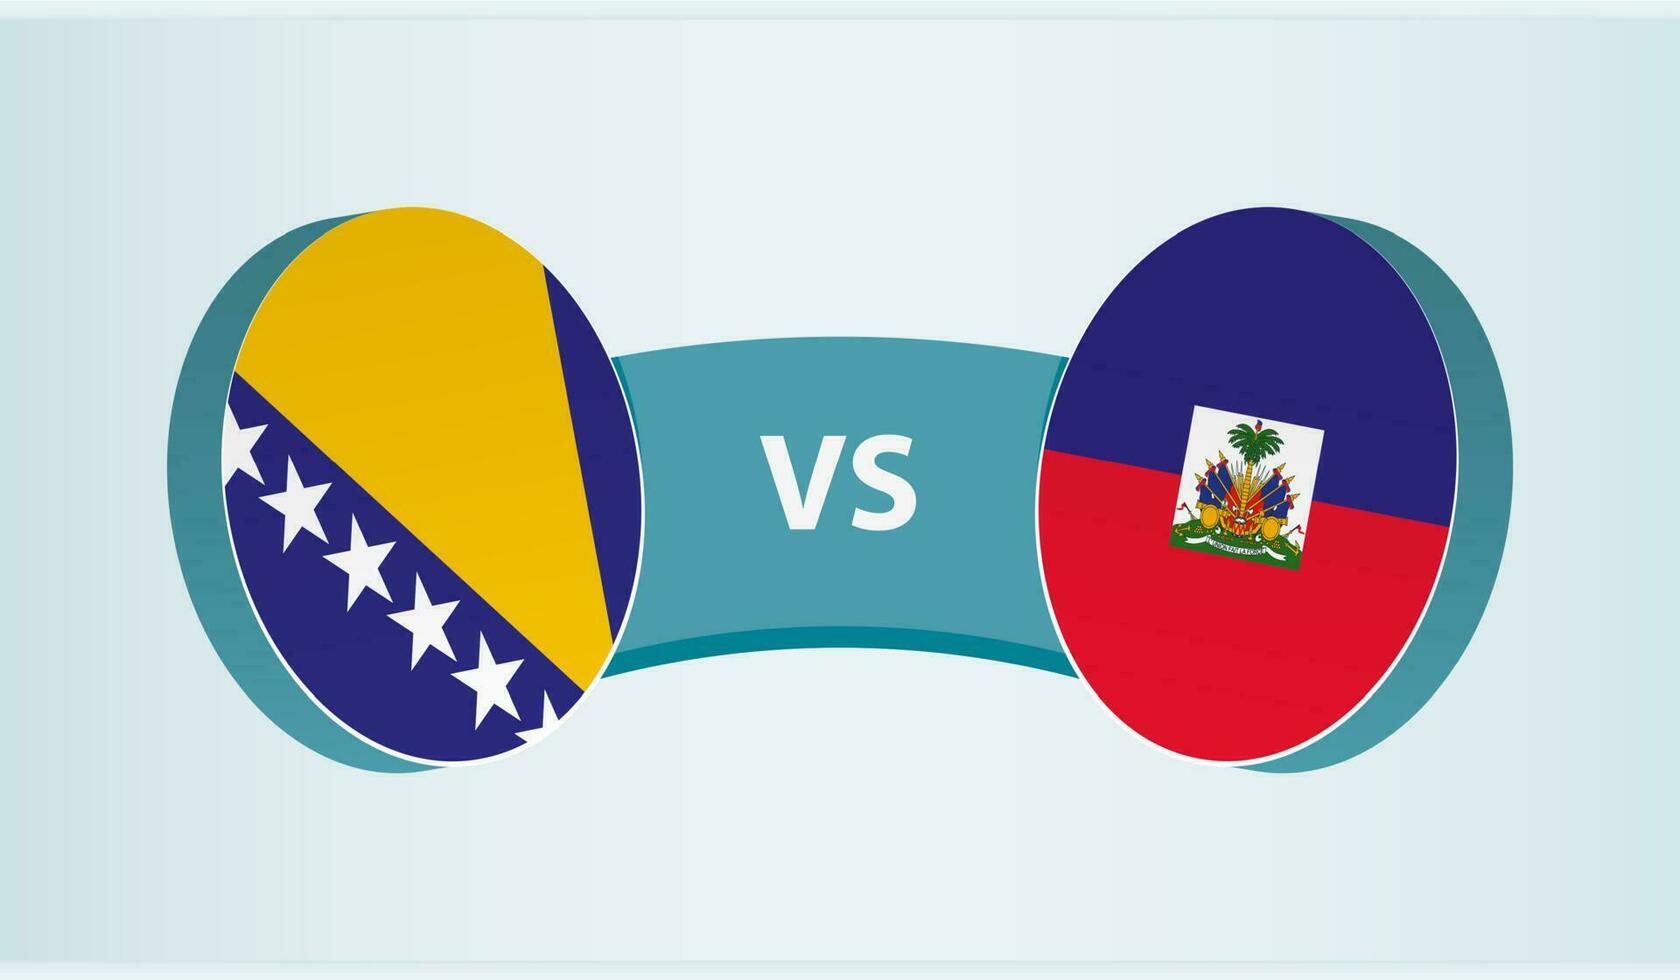 Bosnia and Herzegovina versus Haiti, team sports competition concept. vector